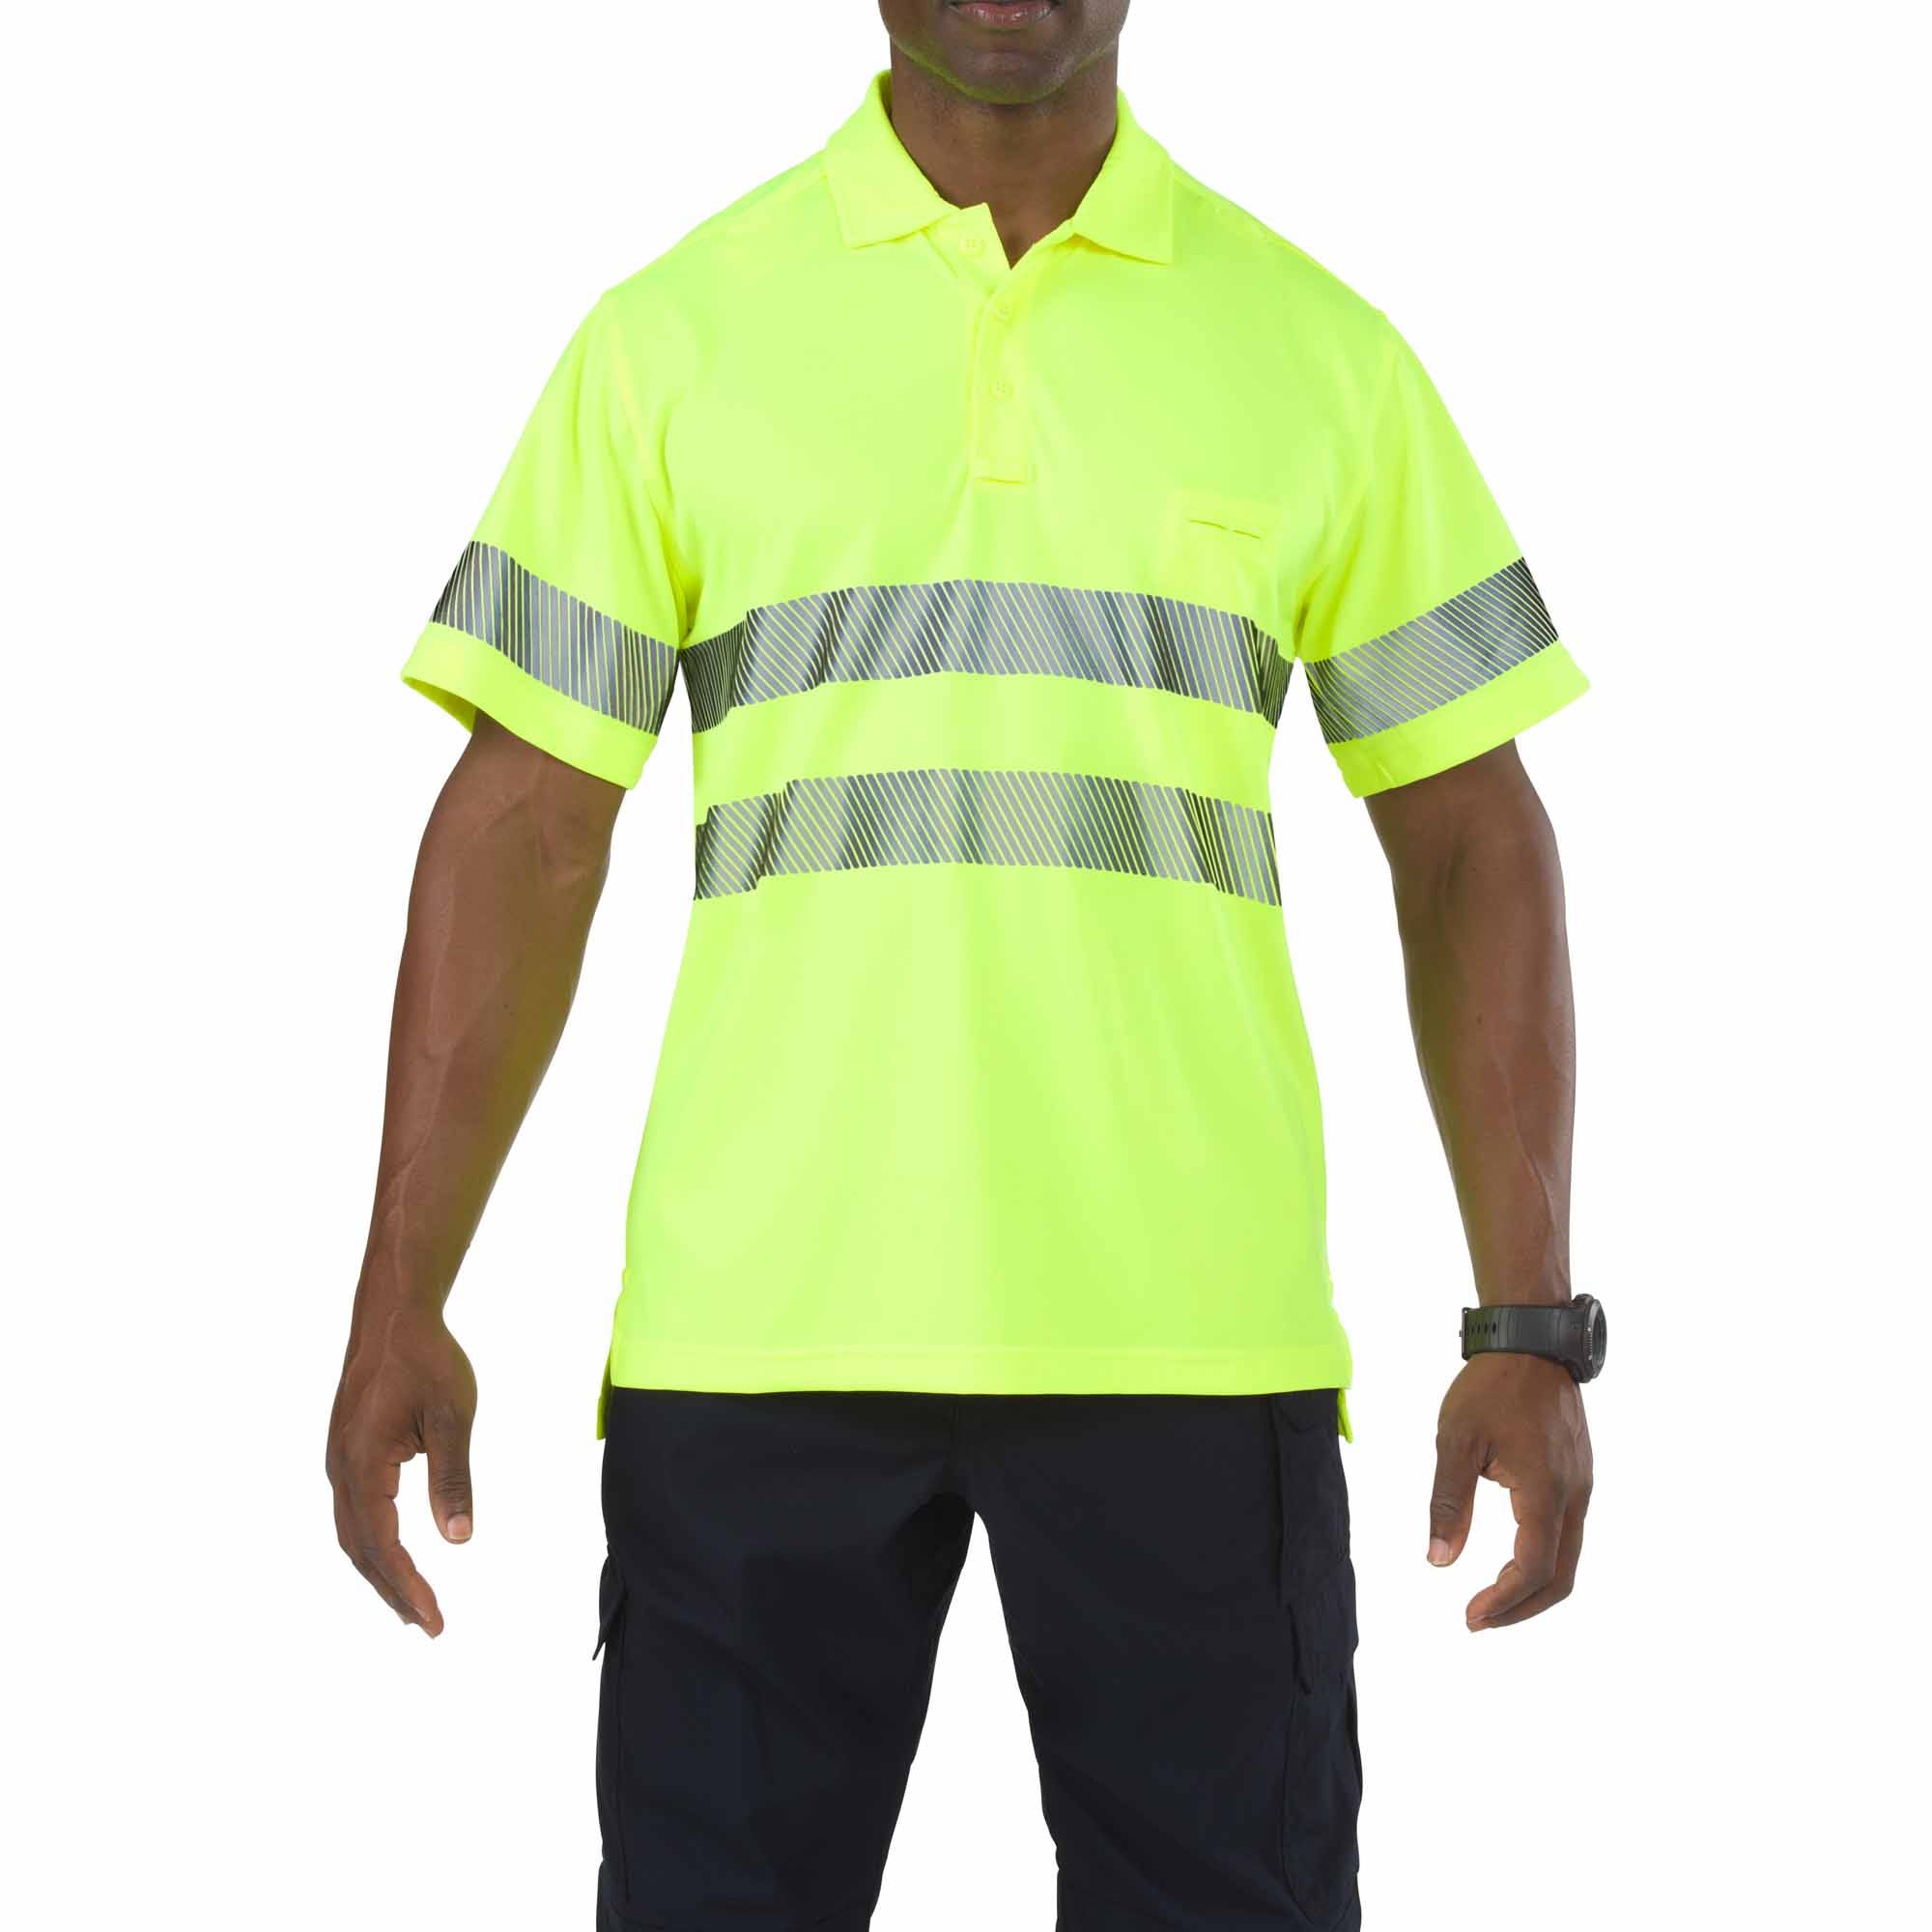 Mens Hi-Visibility Tee Shirt S-7XL Tall